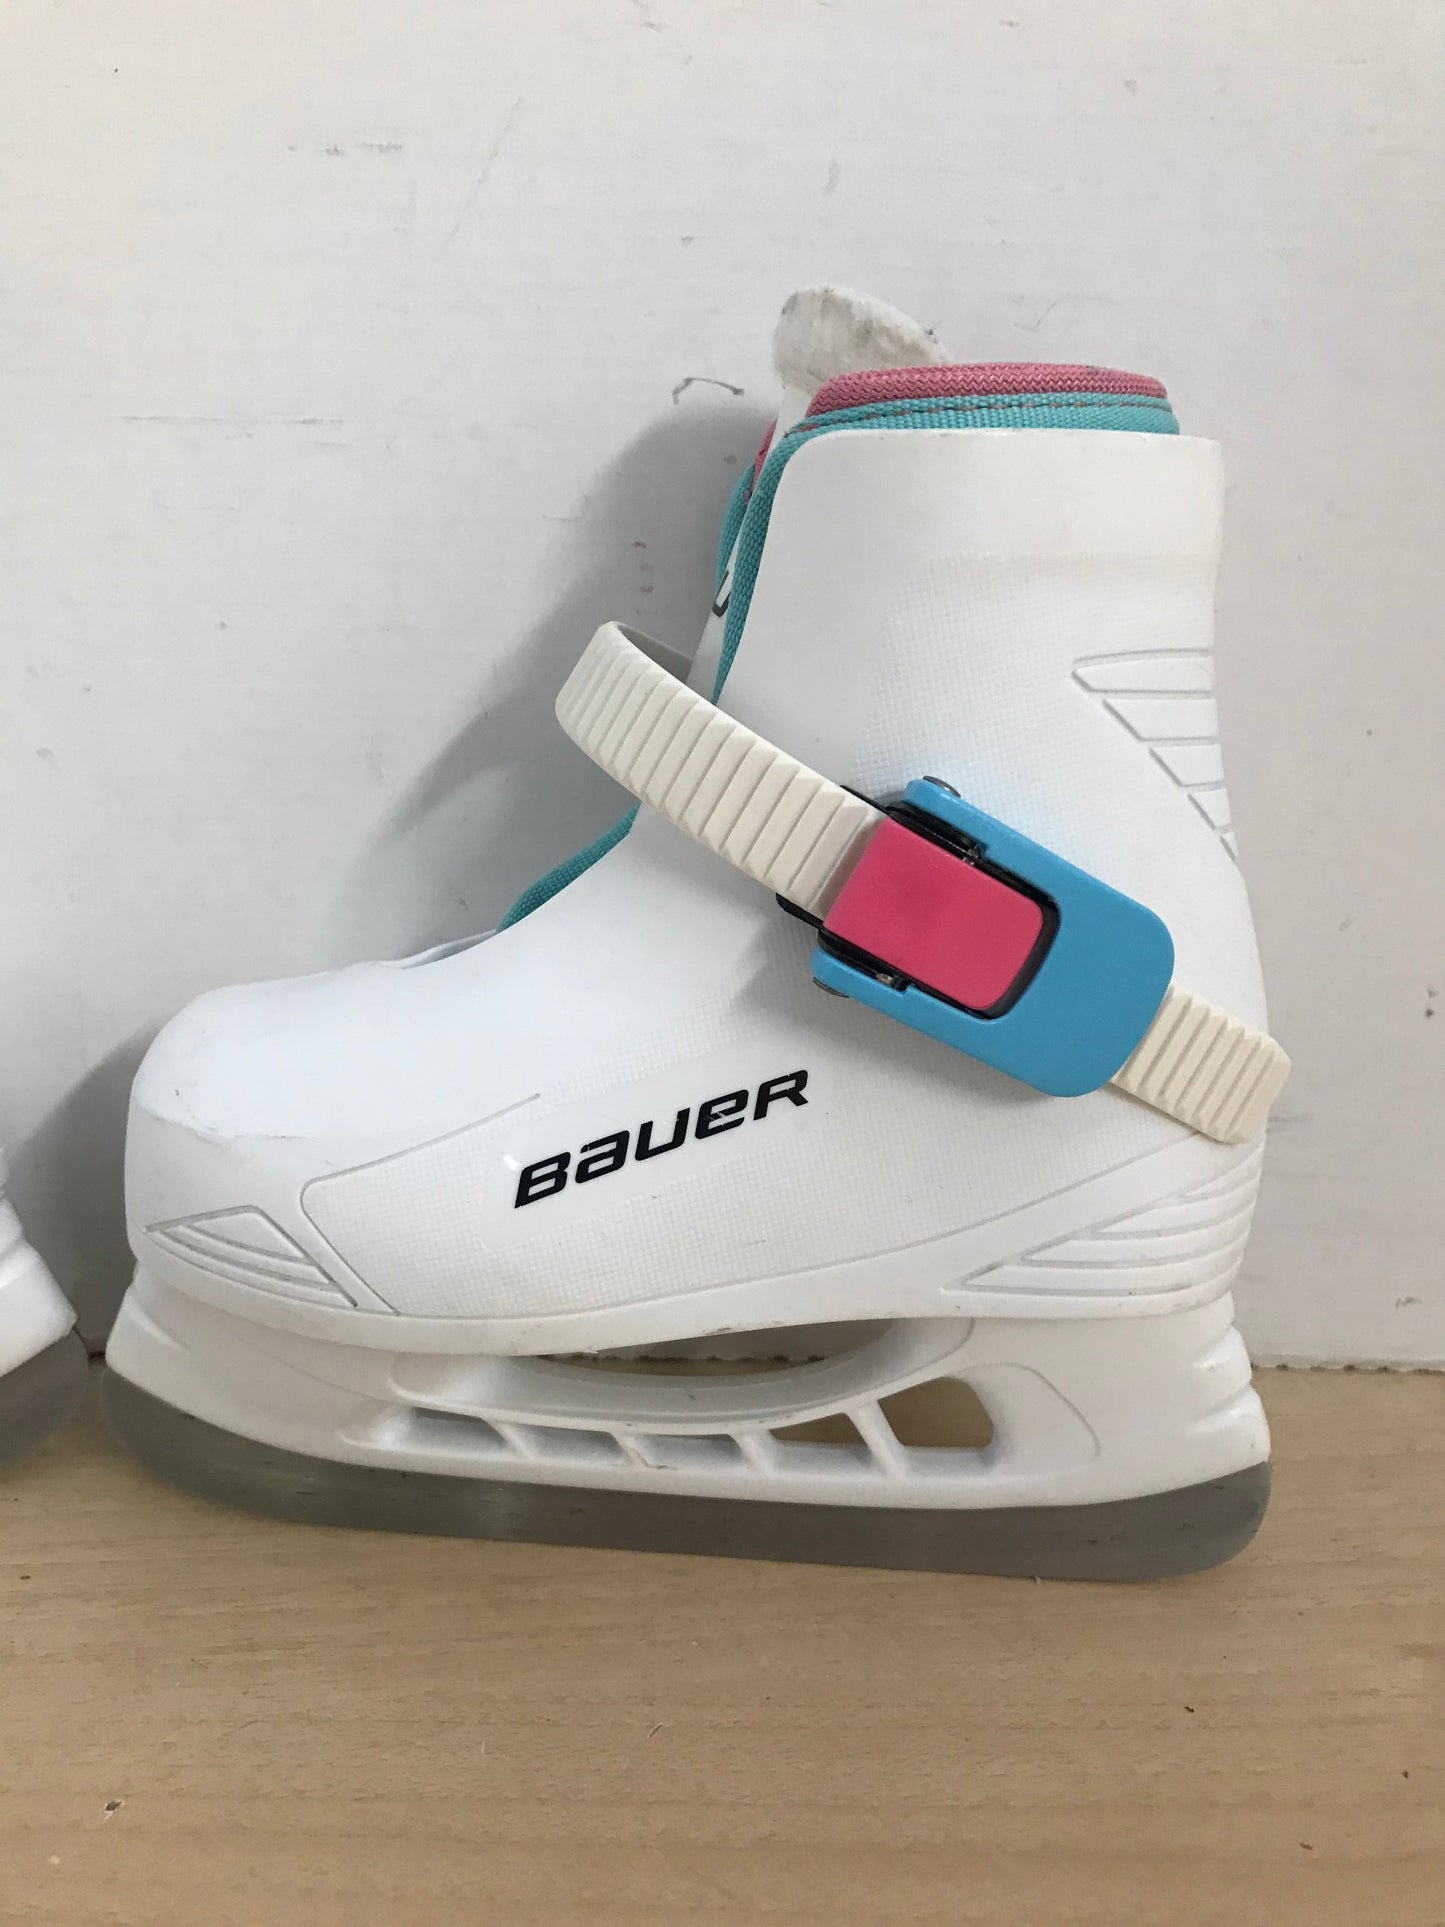 Ice Skates Child Size 6-7 Toddler Bauer Adjustable With Liner Excellent White Pink